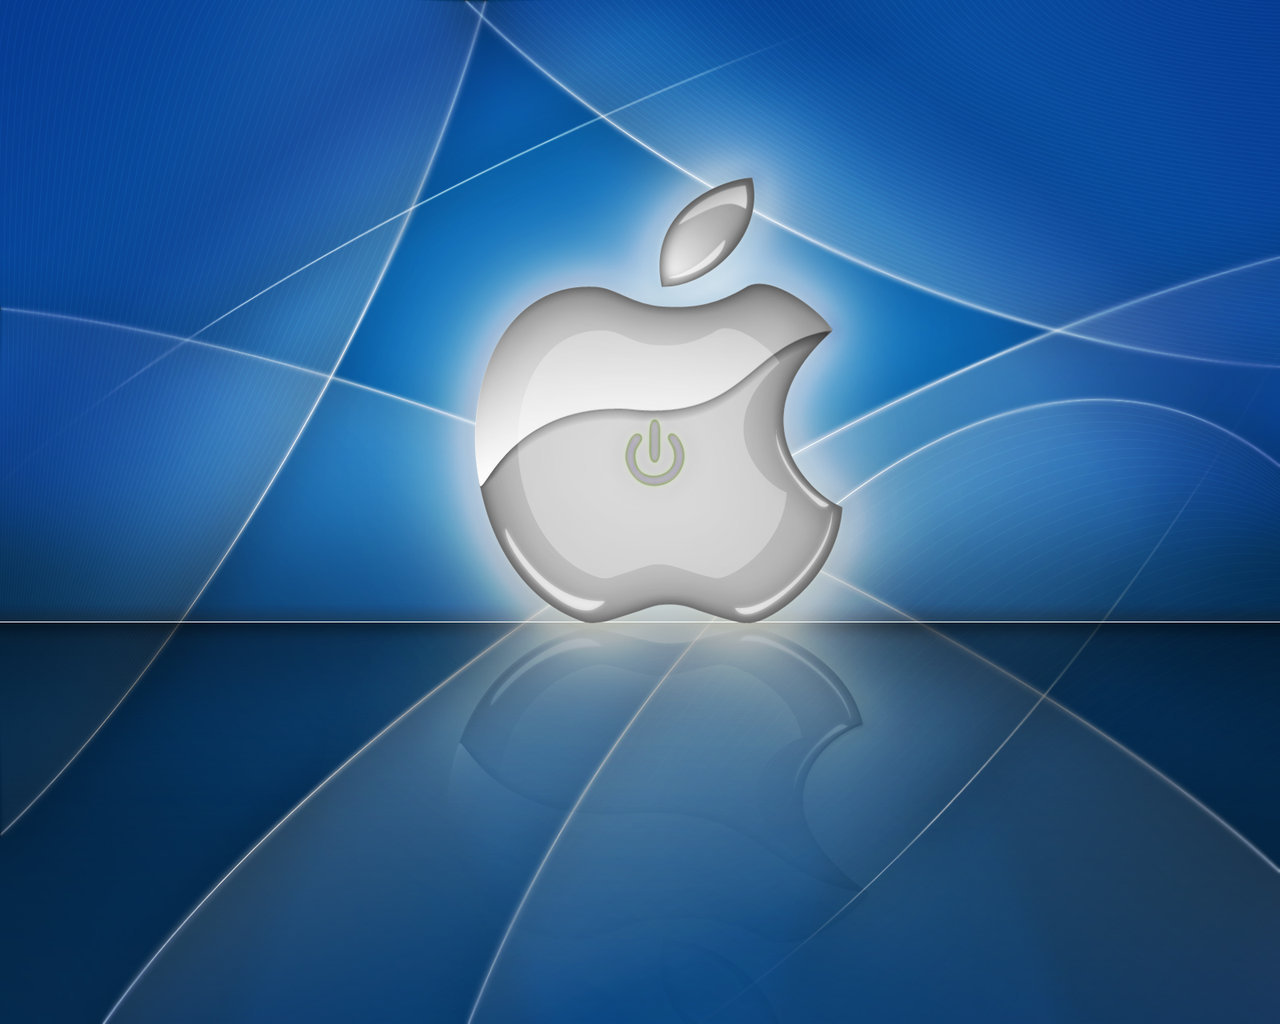 Free download blue apple wallpaper windowscenternl [1280x1024] for your ...